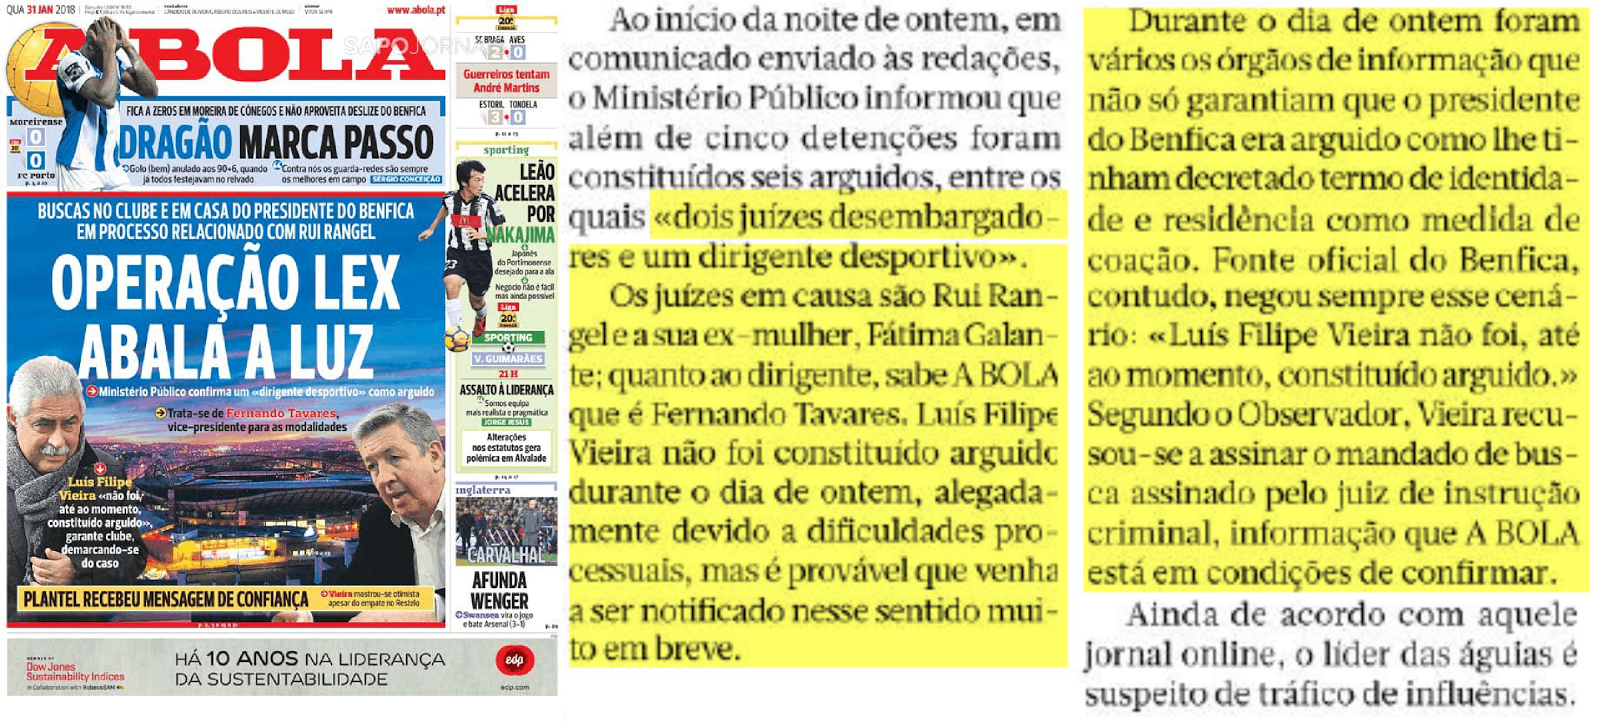 Inês Maia troca o Famalicão pelo Besiktas - Futebol Feminino - Jornal Record